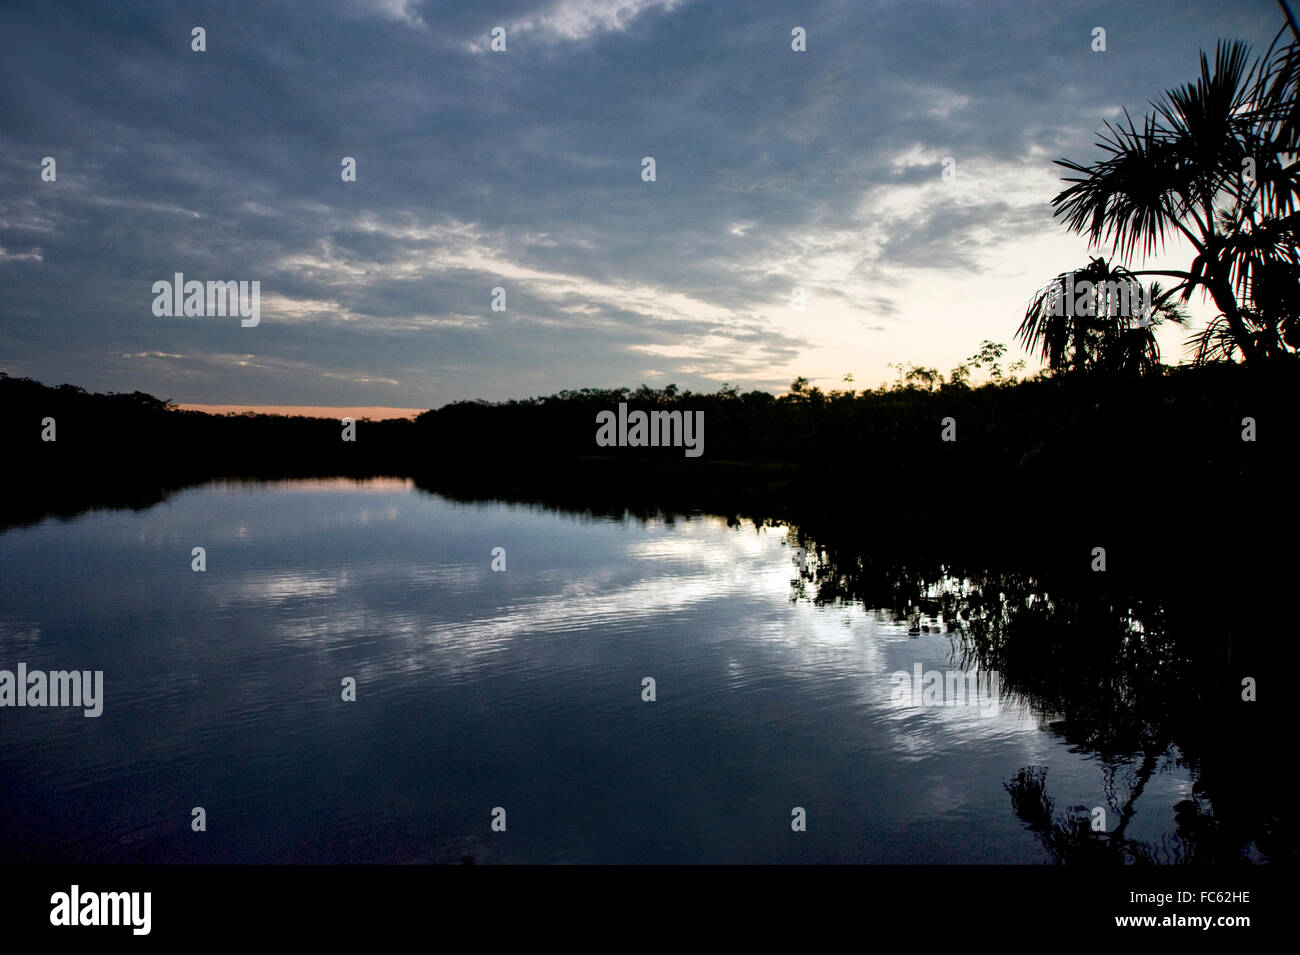 the Amazon river in Ecuador at sunset Stock Photo